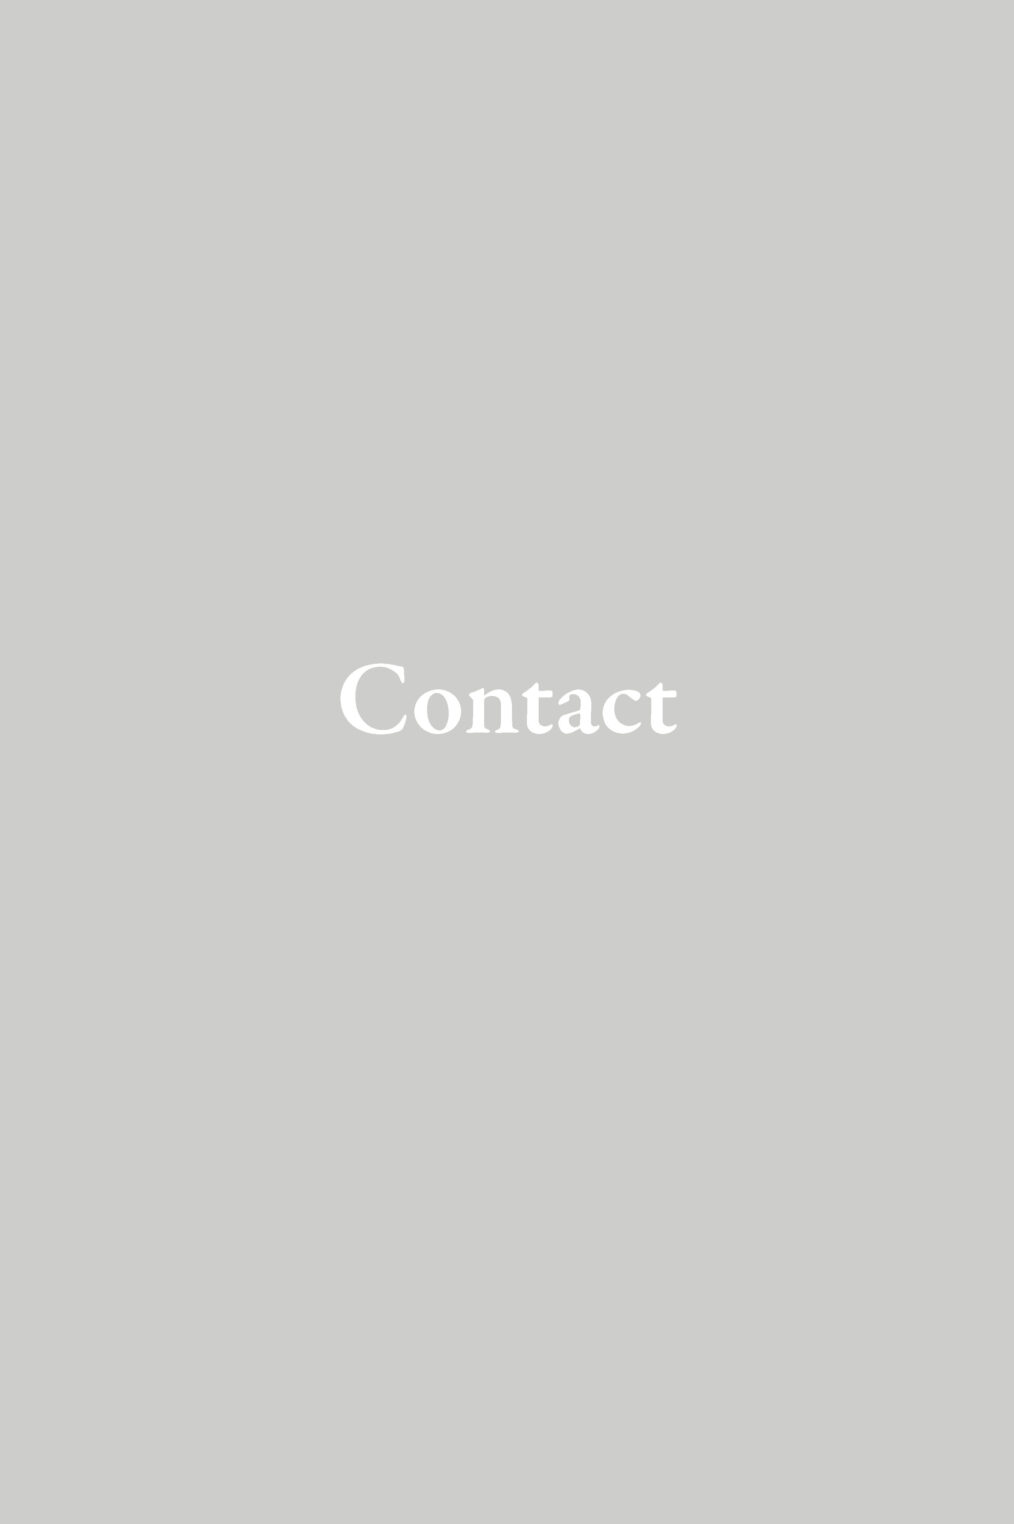 vign_contact